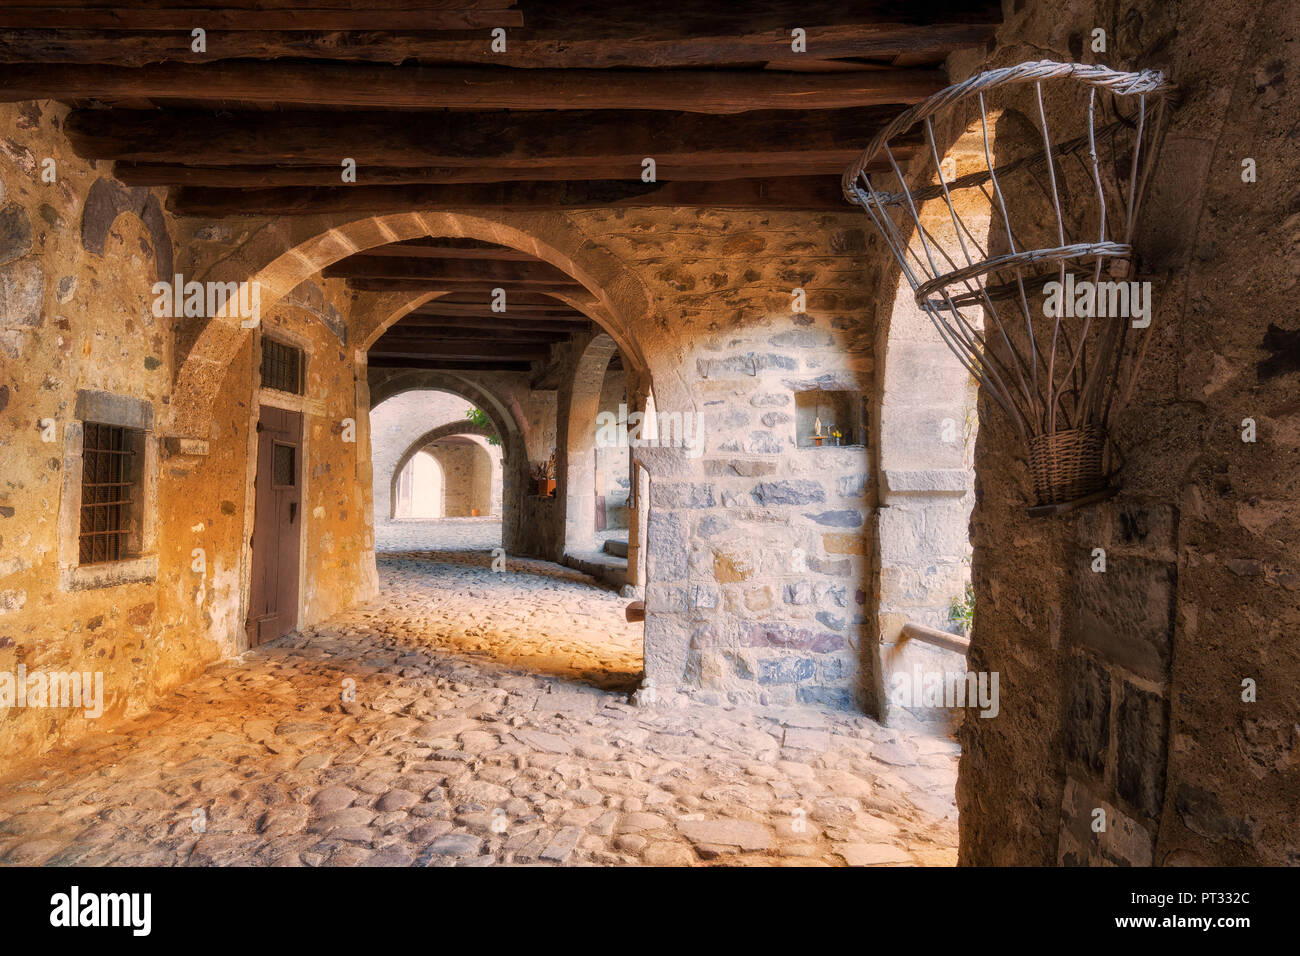 Old town of Camerata Cornello, Val Brembana, Bergamo province, Lombardy, Italy, Stock Photo